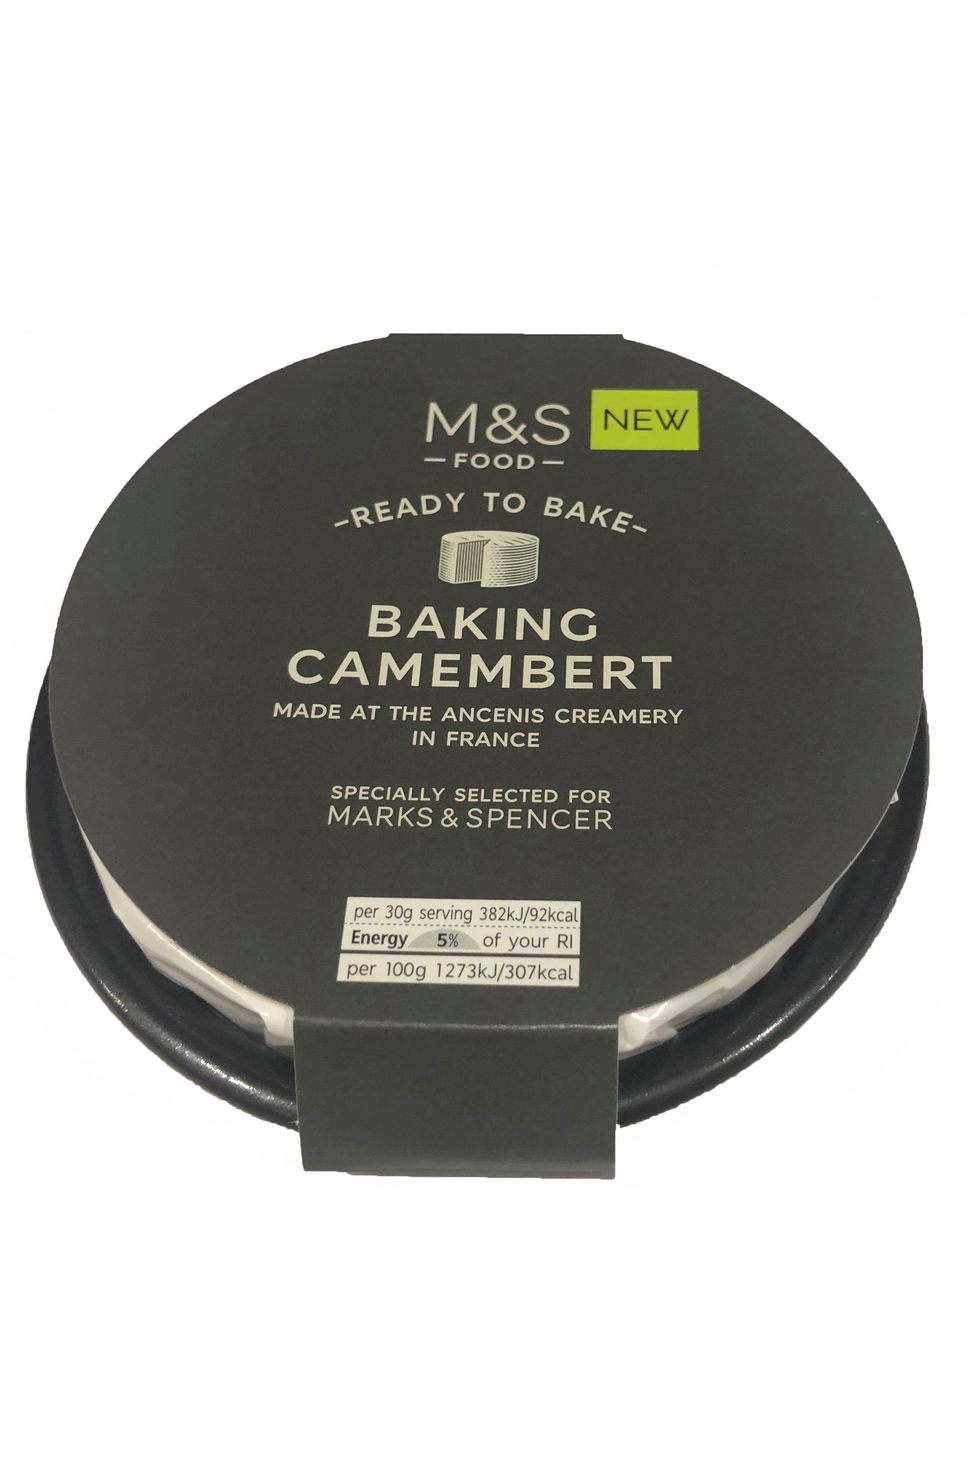 M&S Baking Camembert 250g